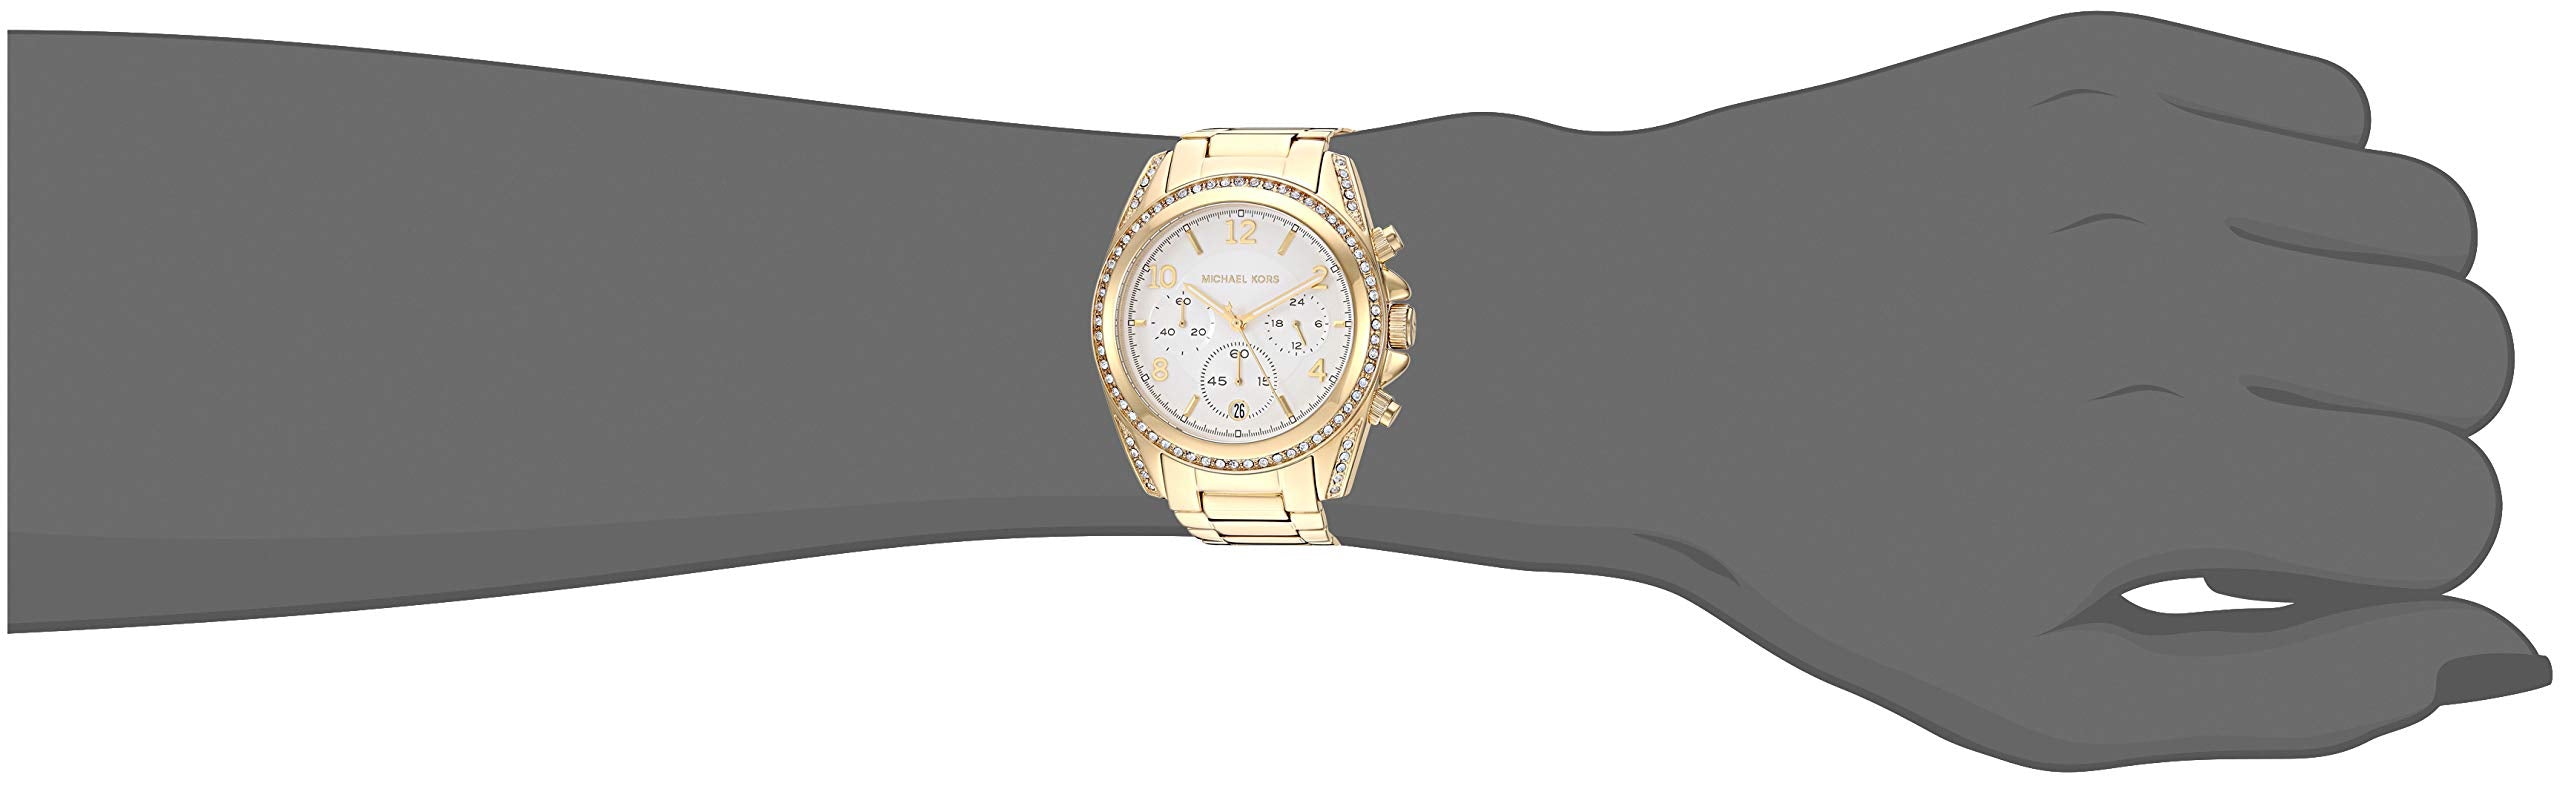 Michael Kors Women's Blair Quartz Watch with Stainless Steel Strap, Gold, 20 (Model: MK6762)